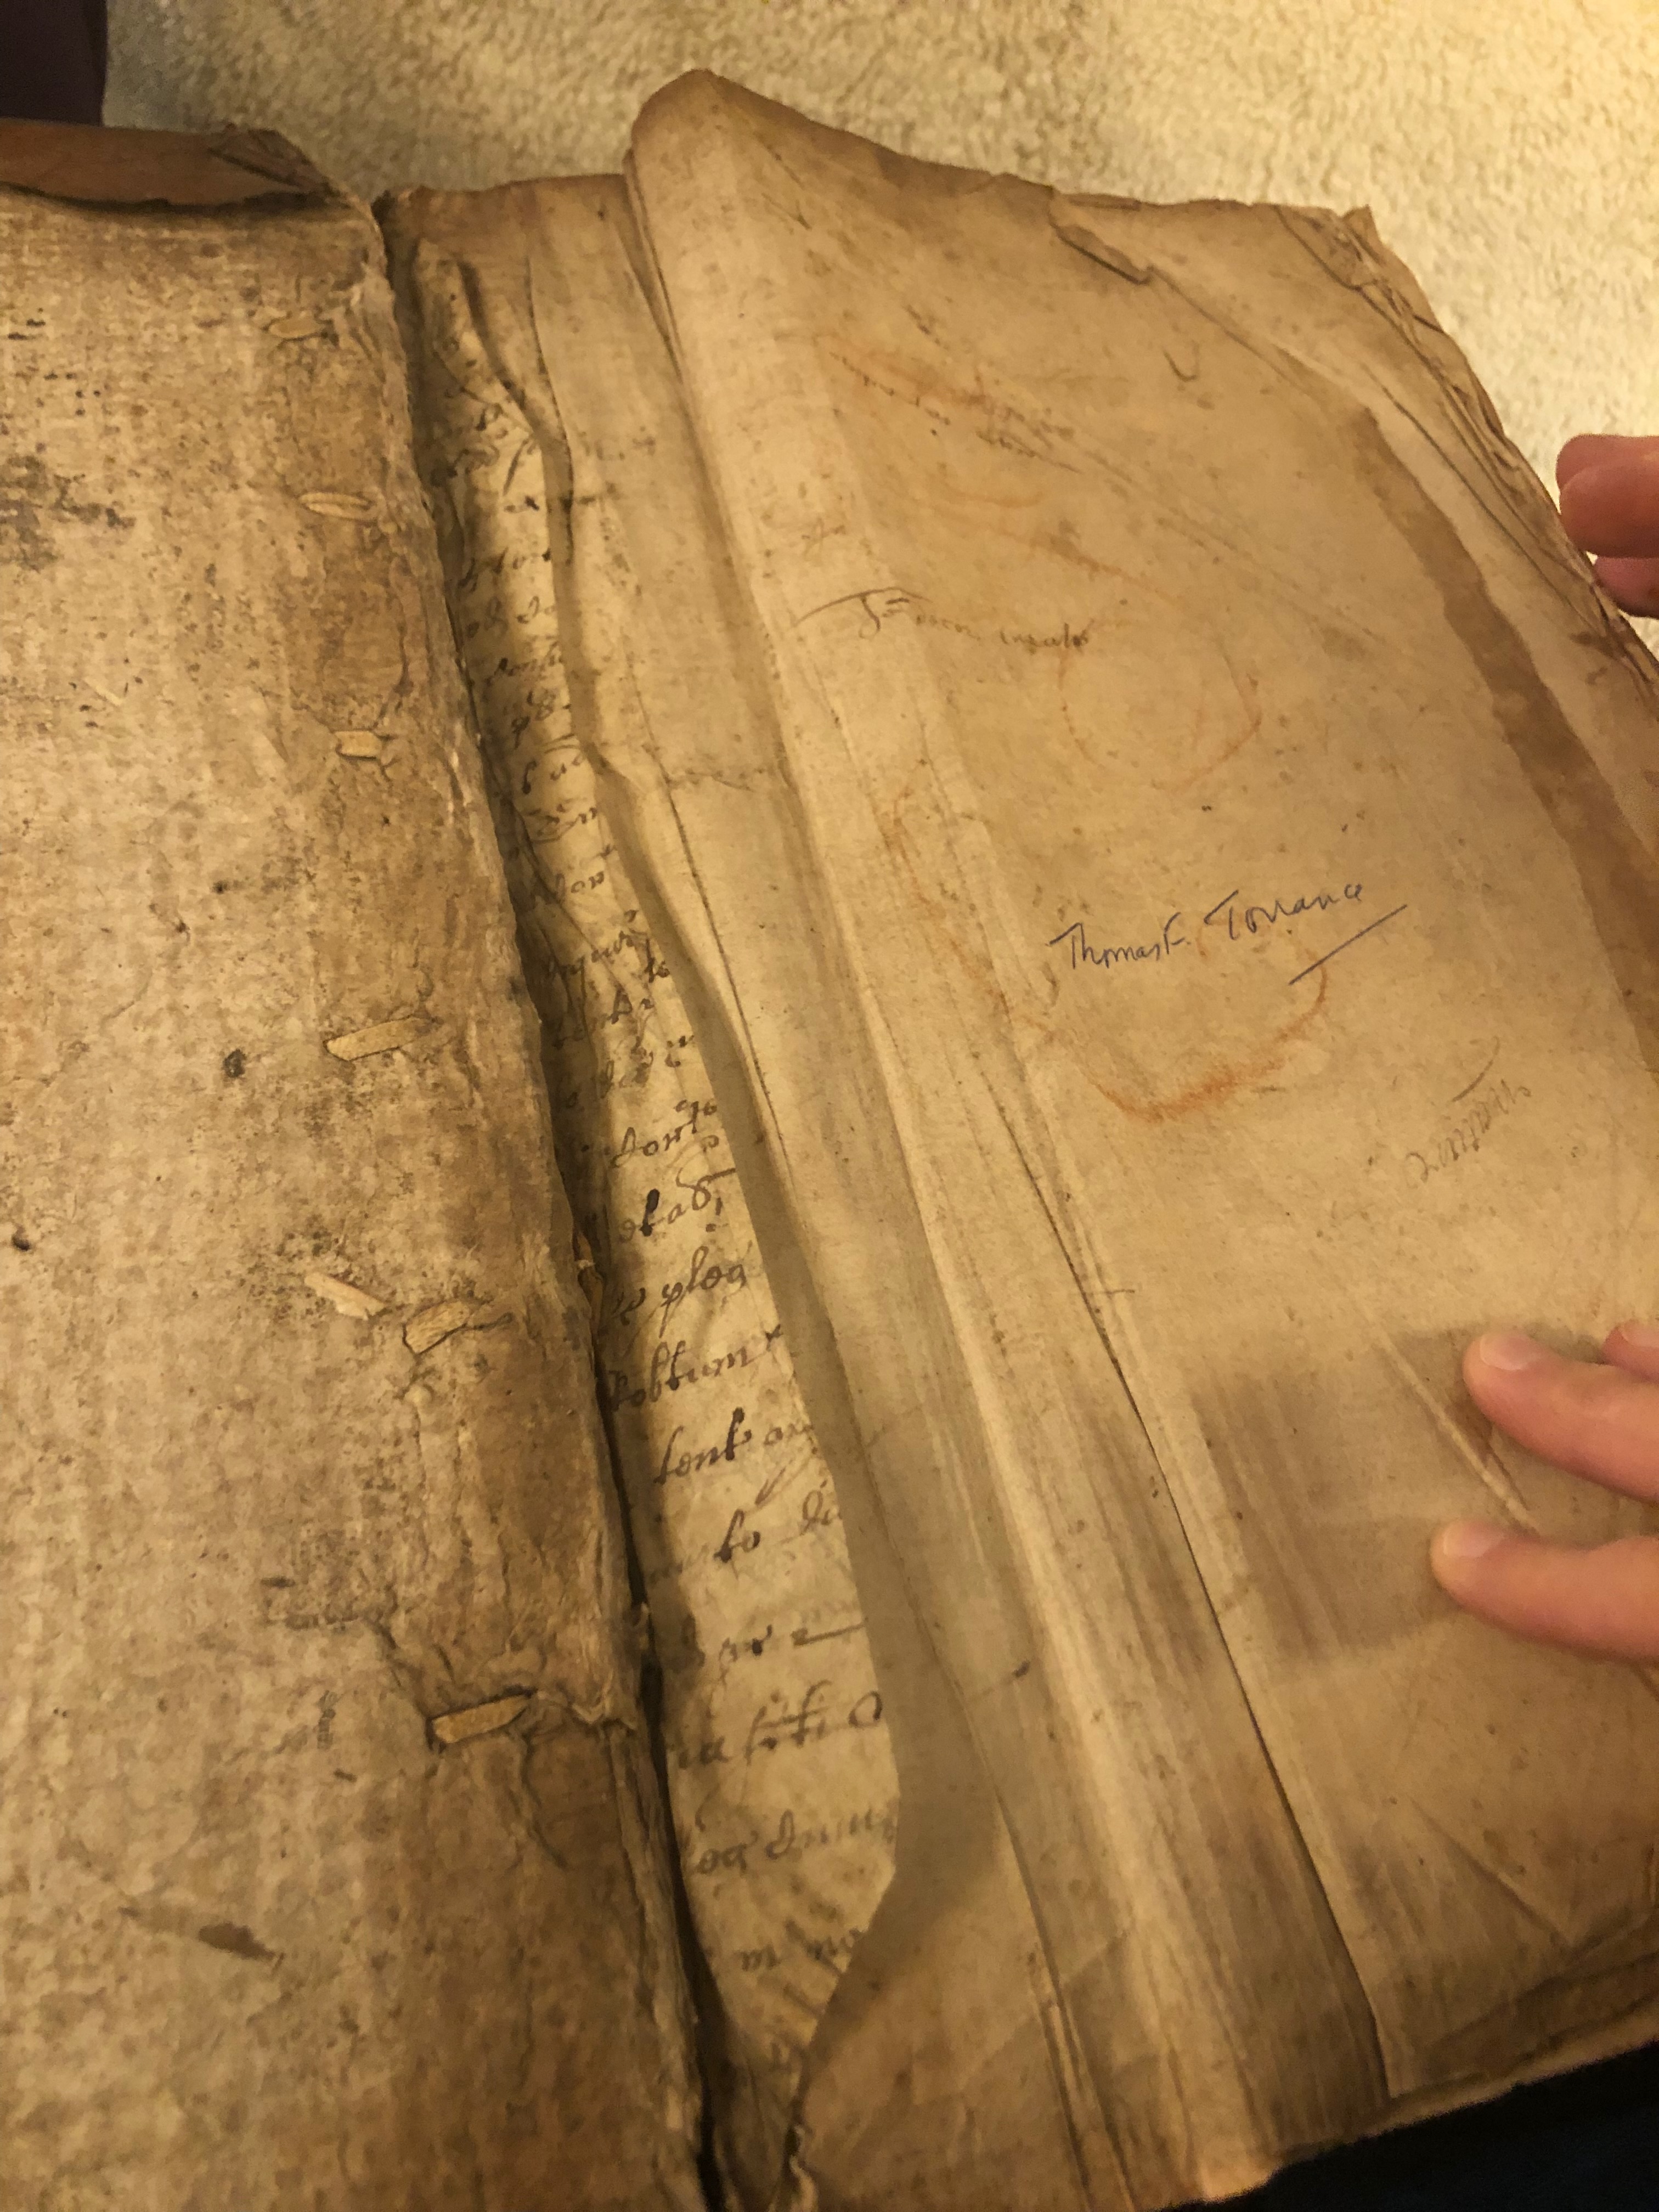 1643-AW-1 end paper inscription